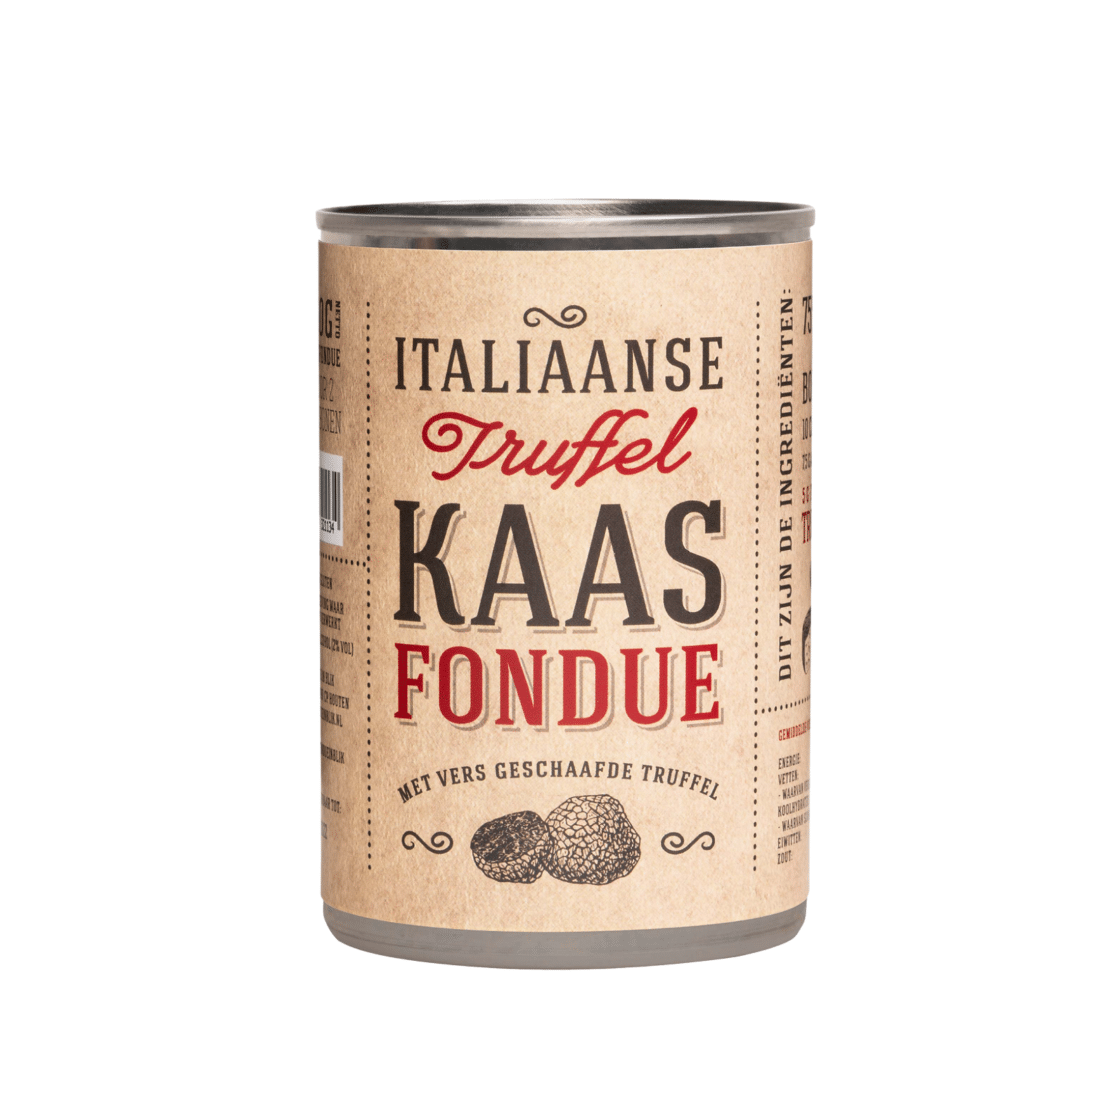 Delicious canned Italian truffle cheese fondue